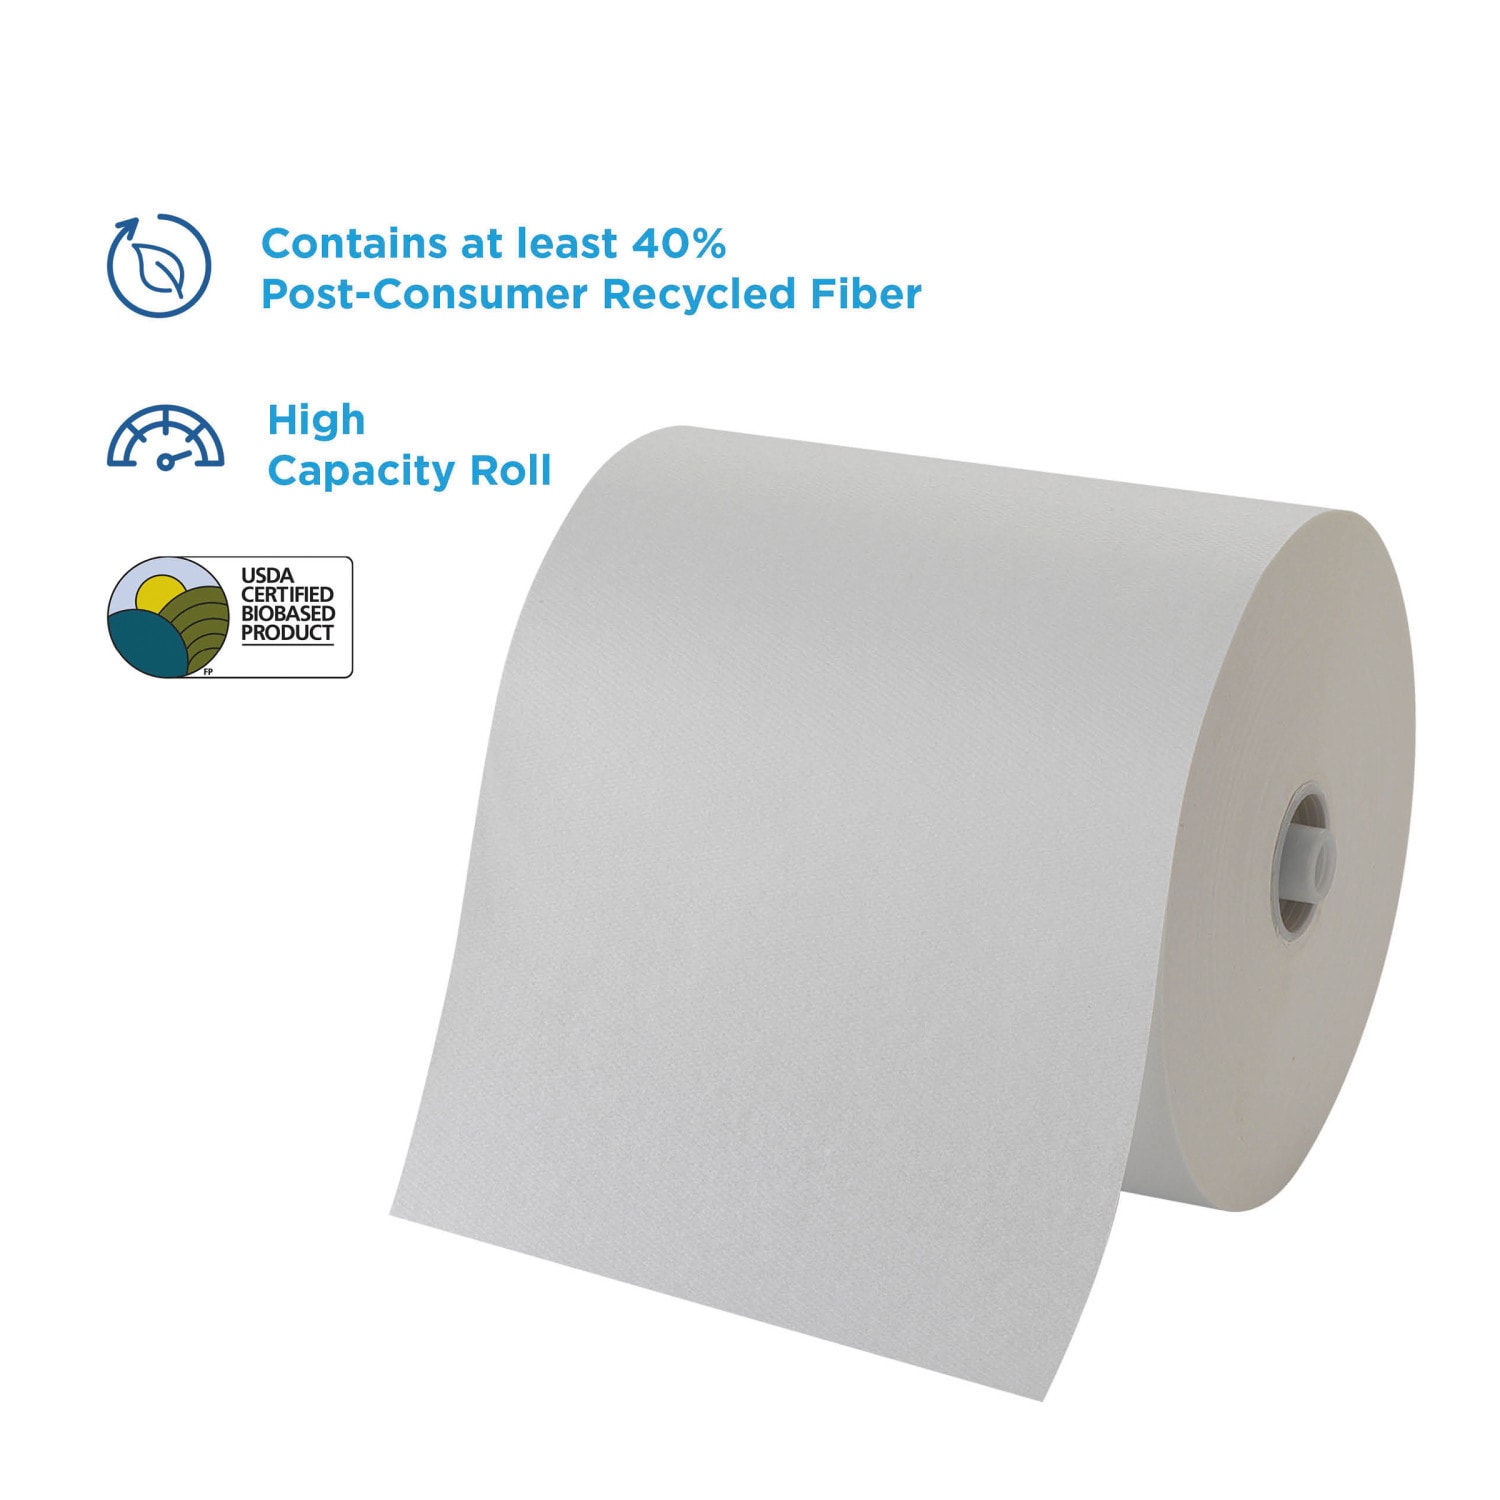 Sample Pack (2 Paper Towel Rolls + 6 Toilet Paper Rolls)